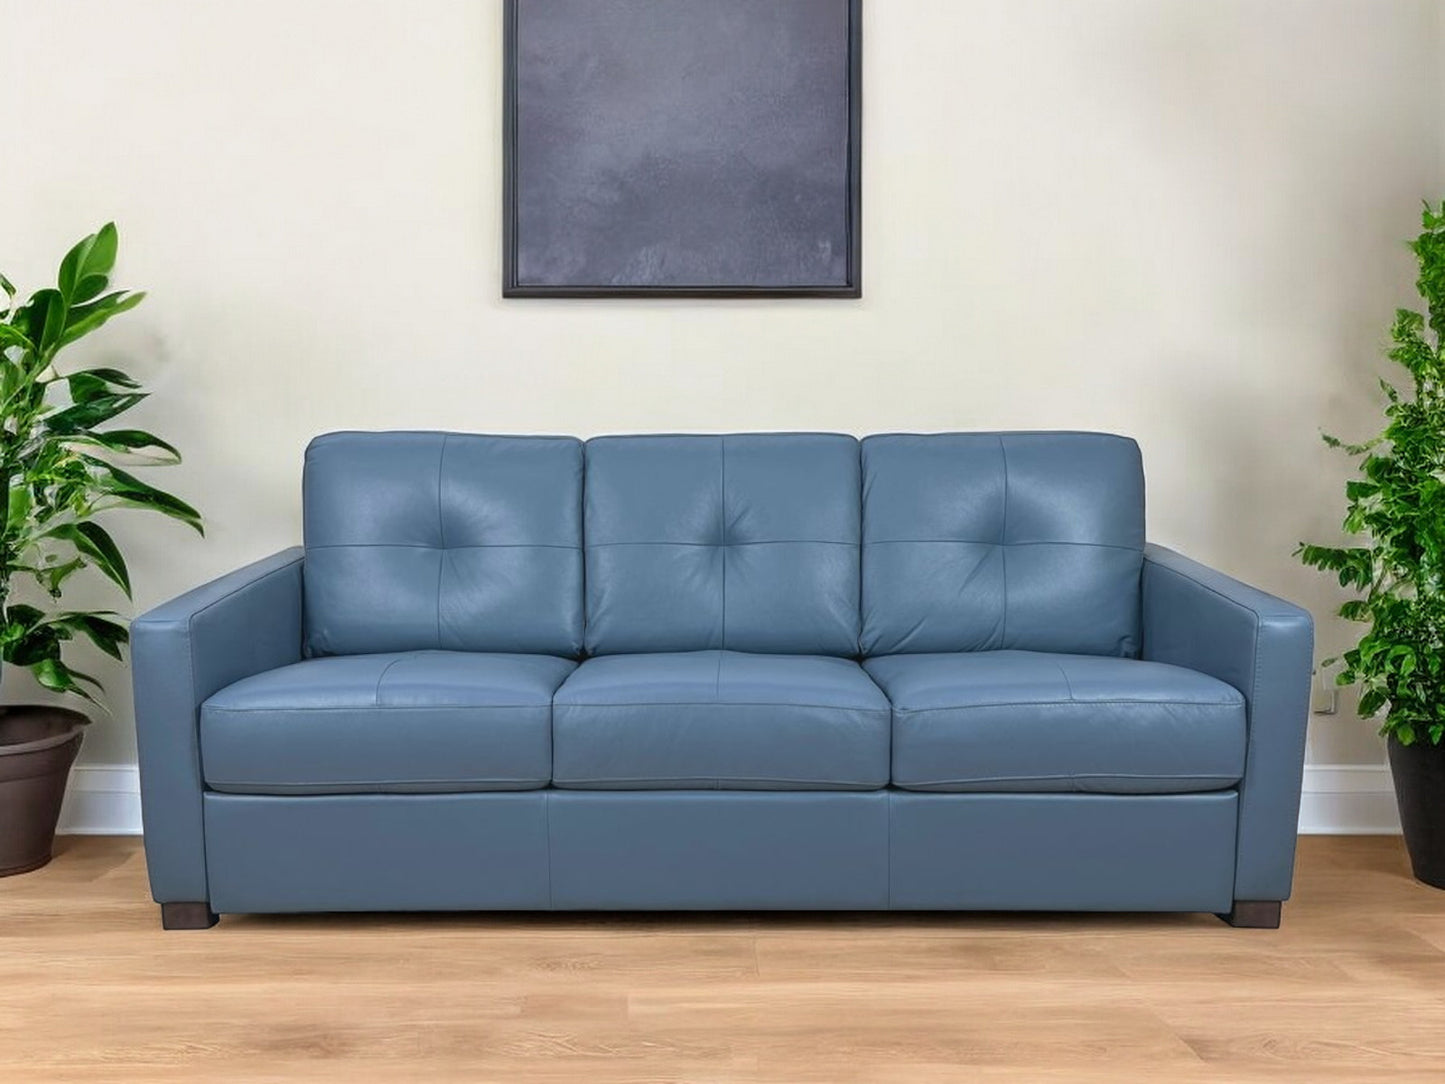 81" Blue Leather Sleeper Sofa With Black Legs